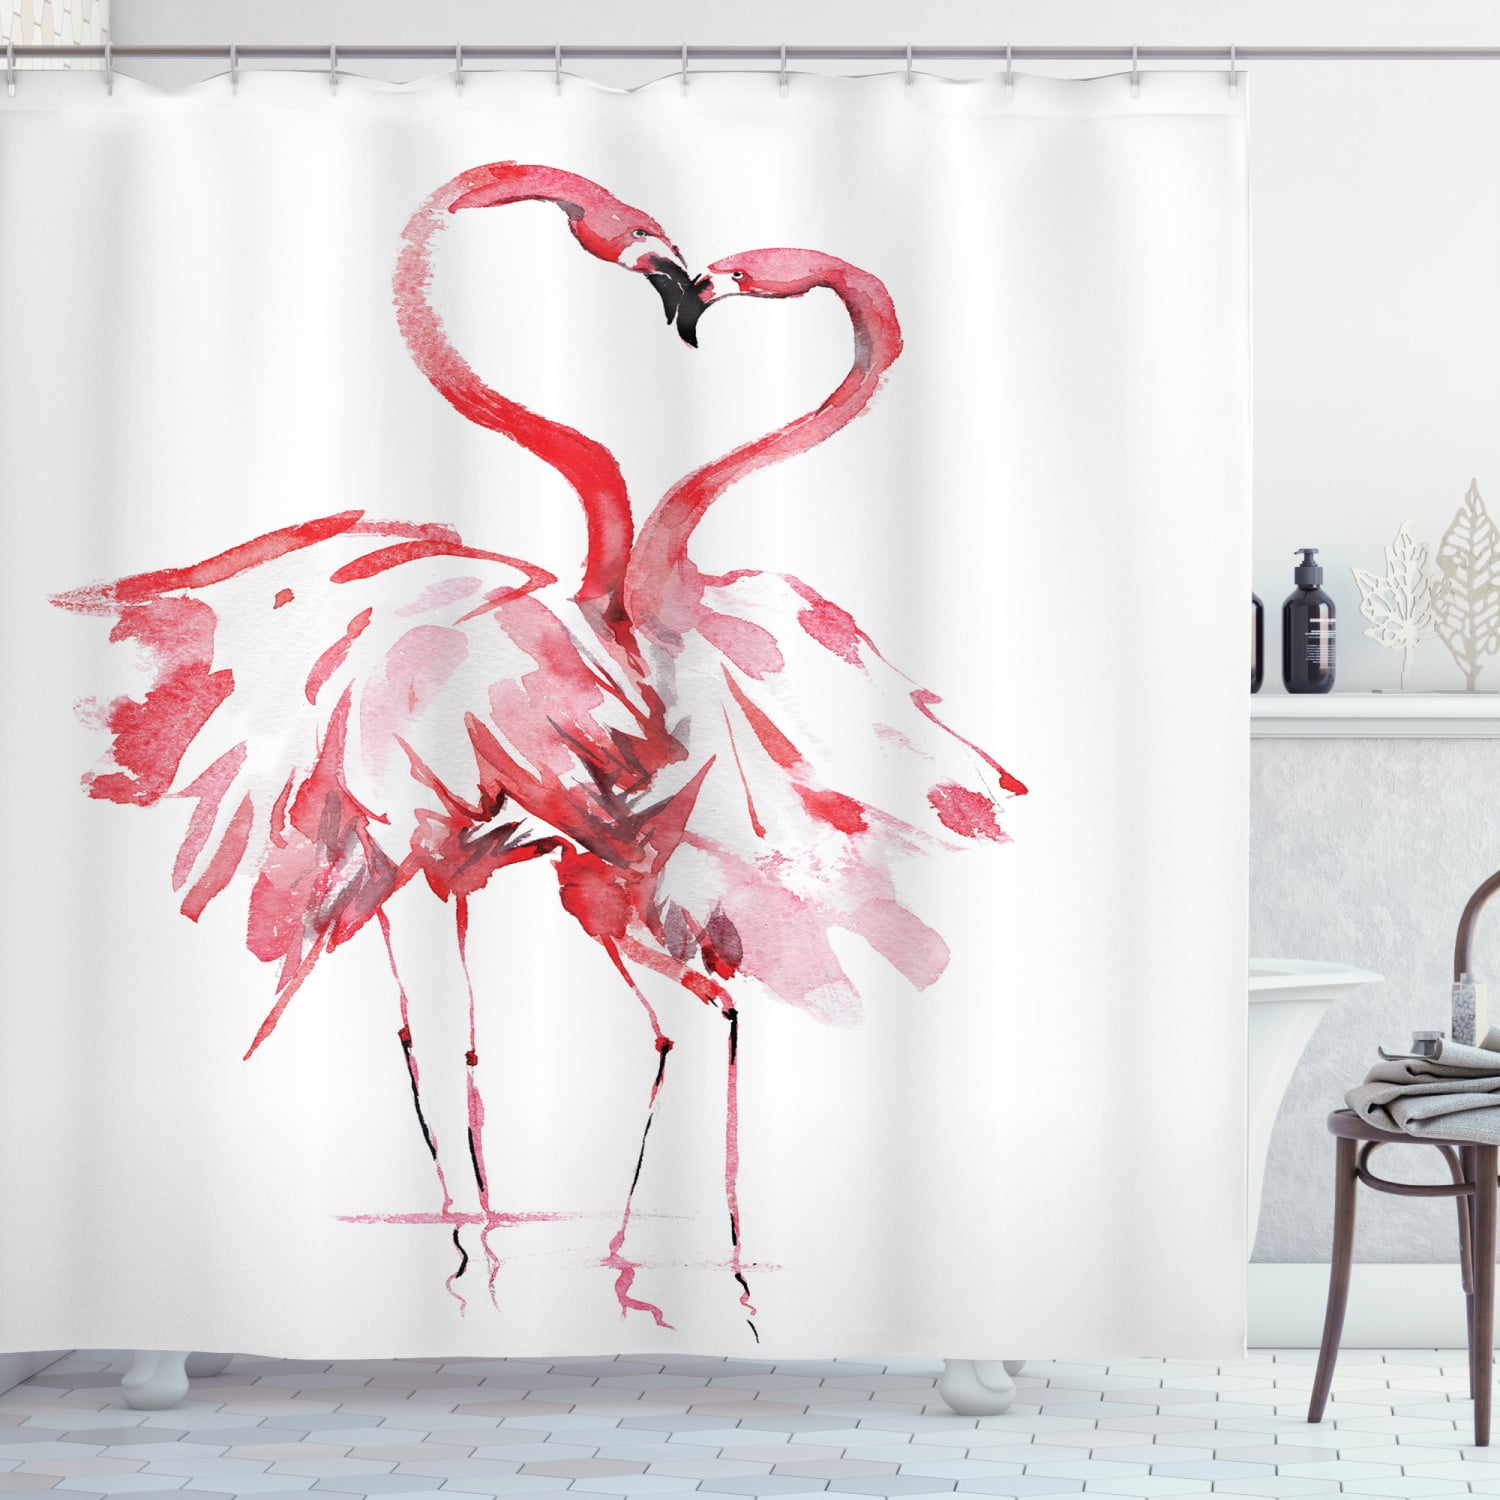 Hot Flamingos Waterproof Bathroom Polyester Shower Curtain Liner Water Resistant